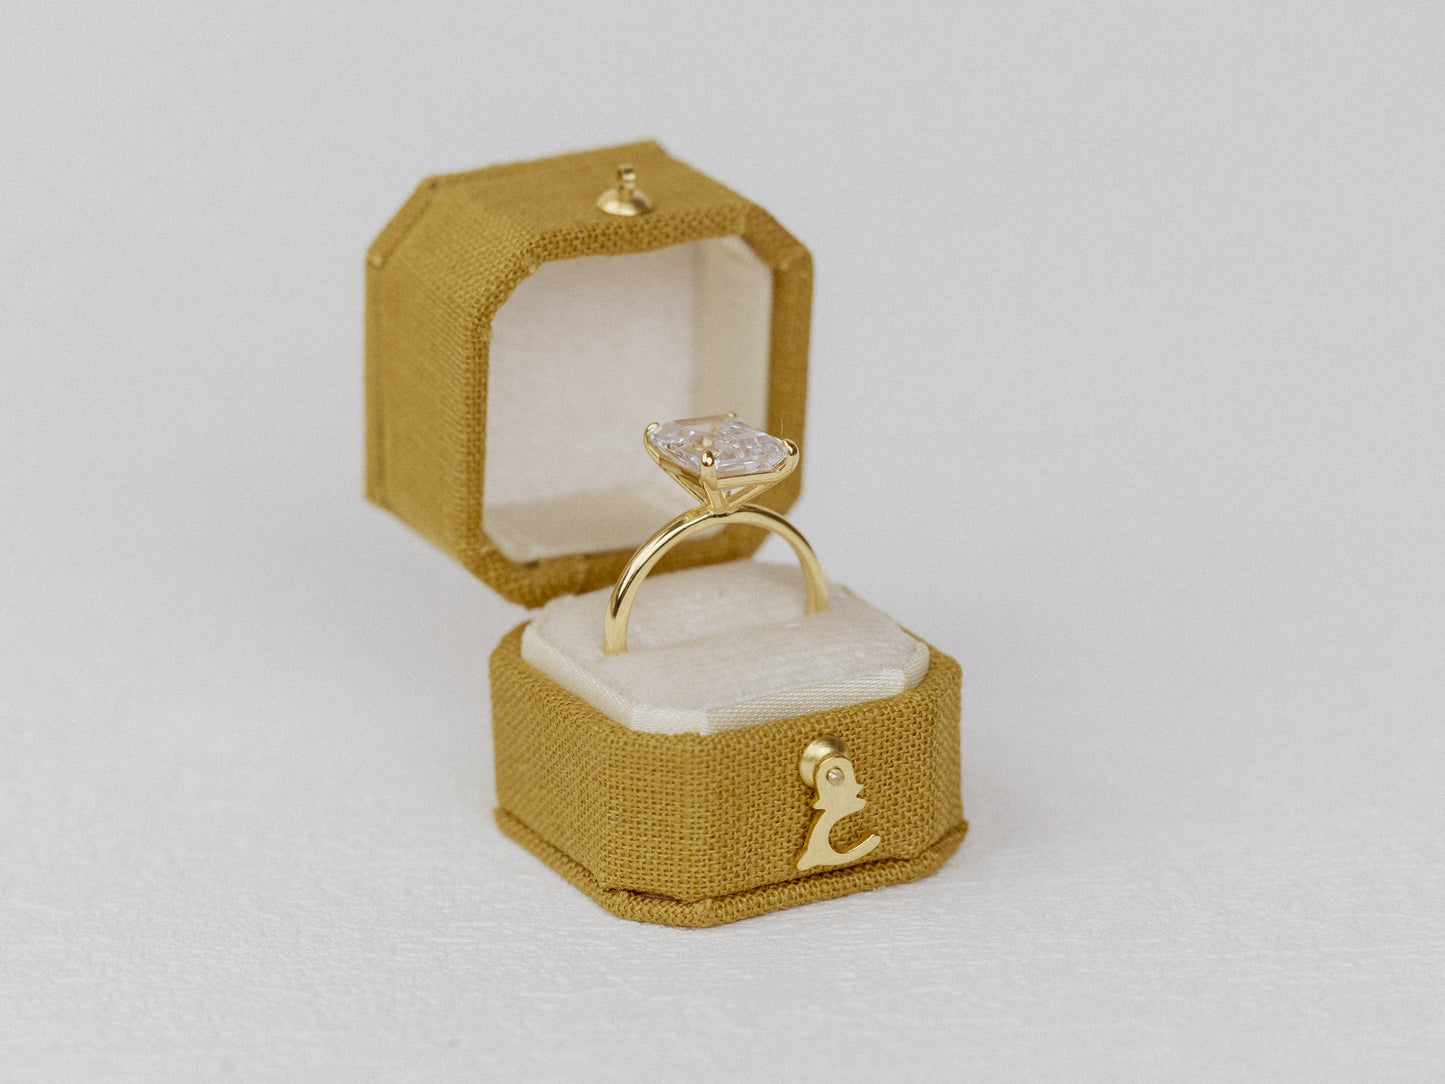 Oro/Dove Radiant Georgian Ring Box